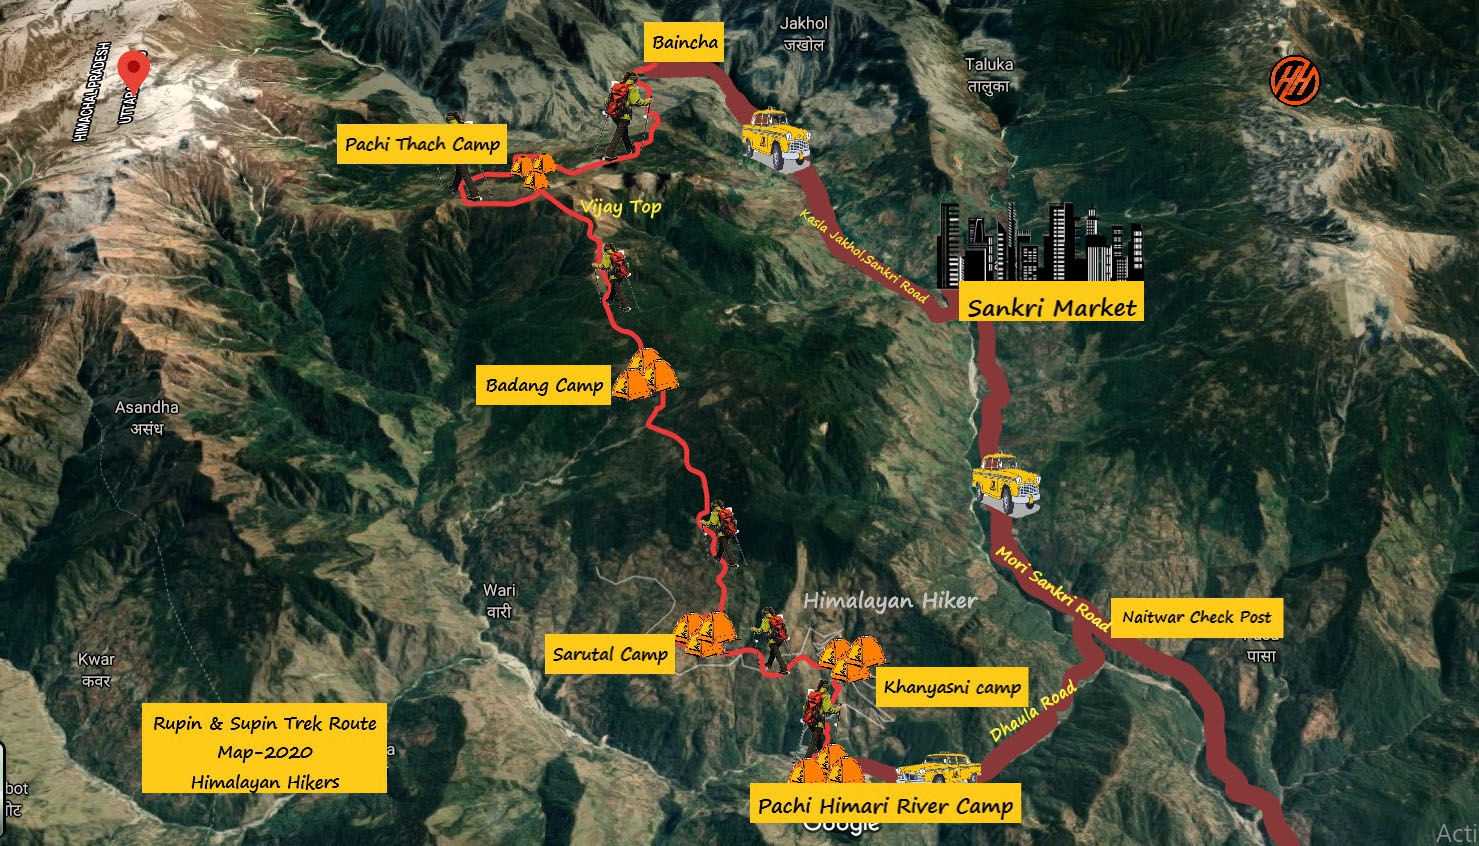 Rupin & Supin Trek Route Map